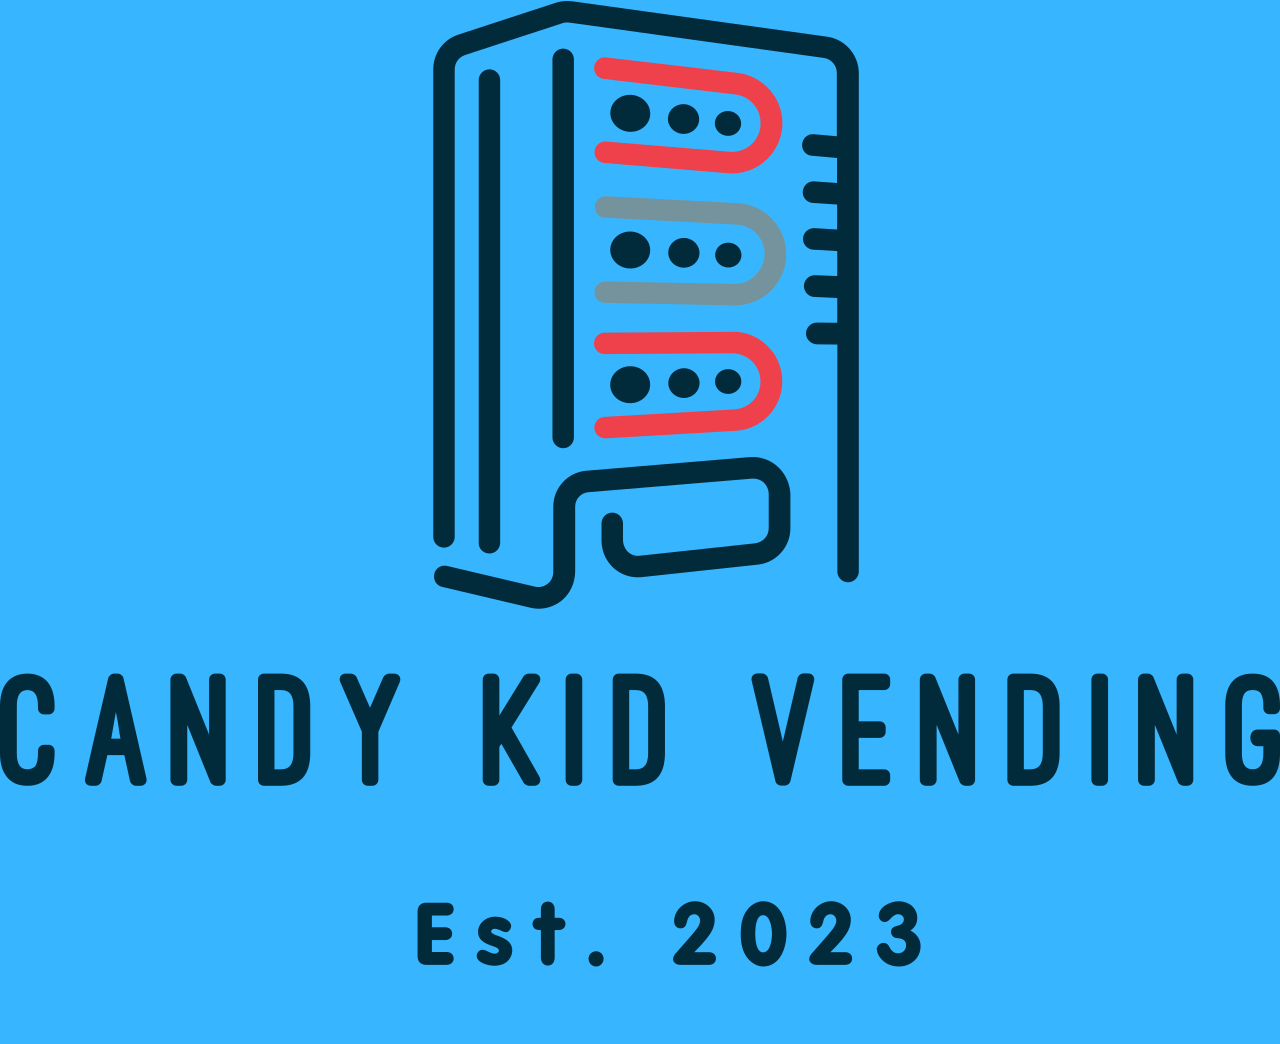 Candy Kid Vending's logo